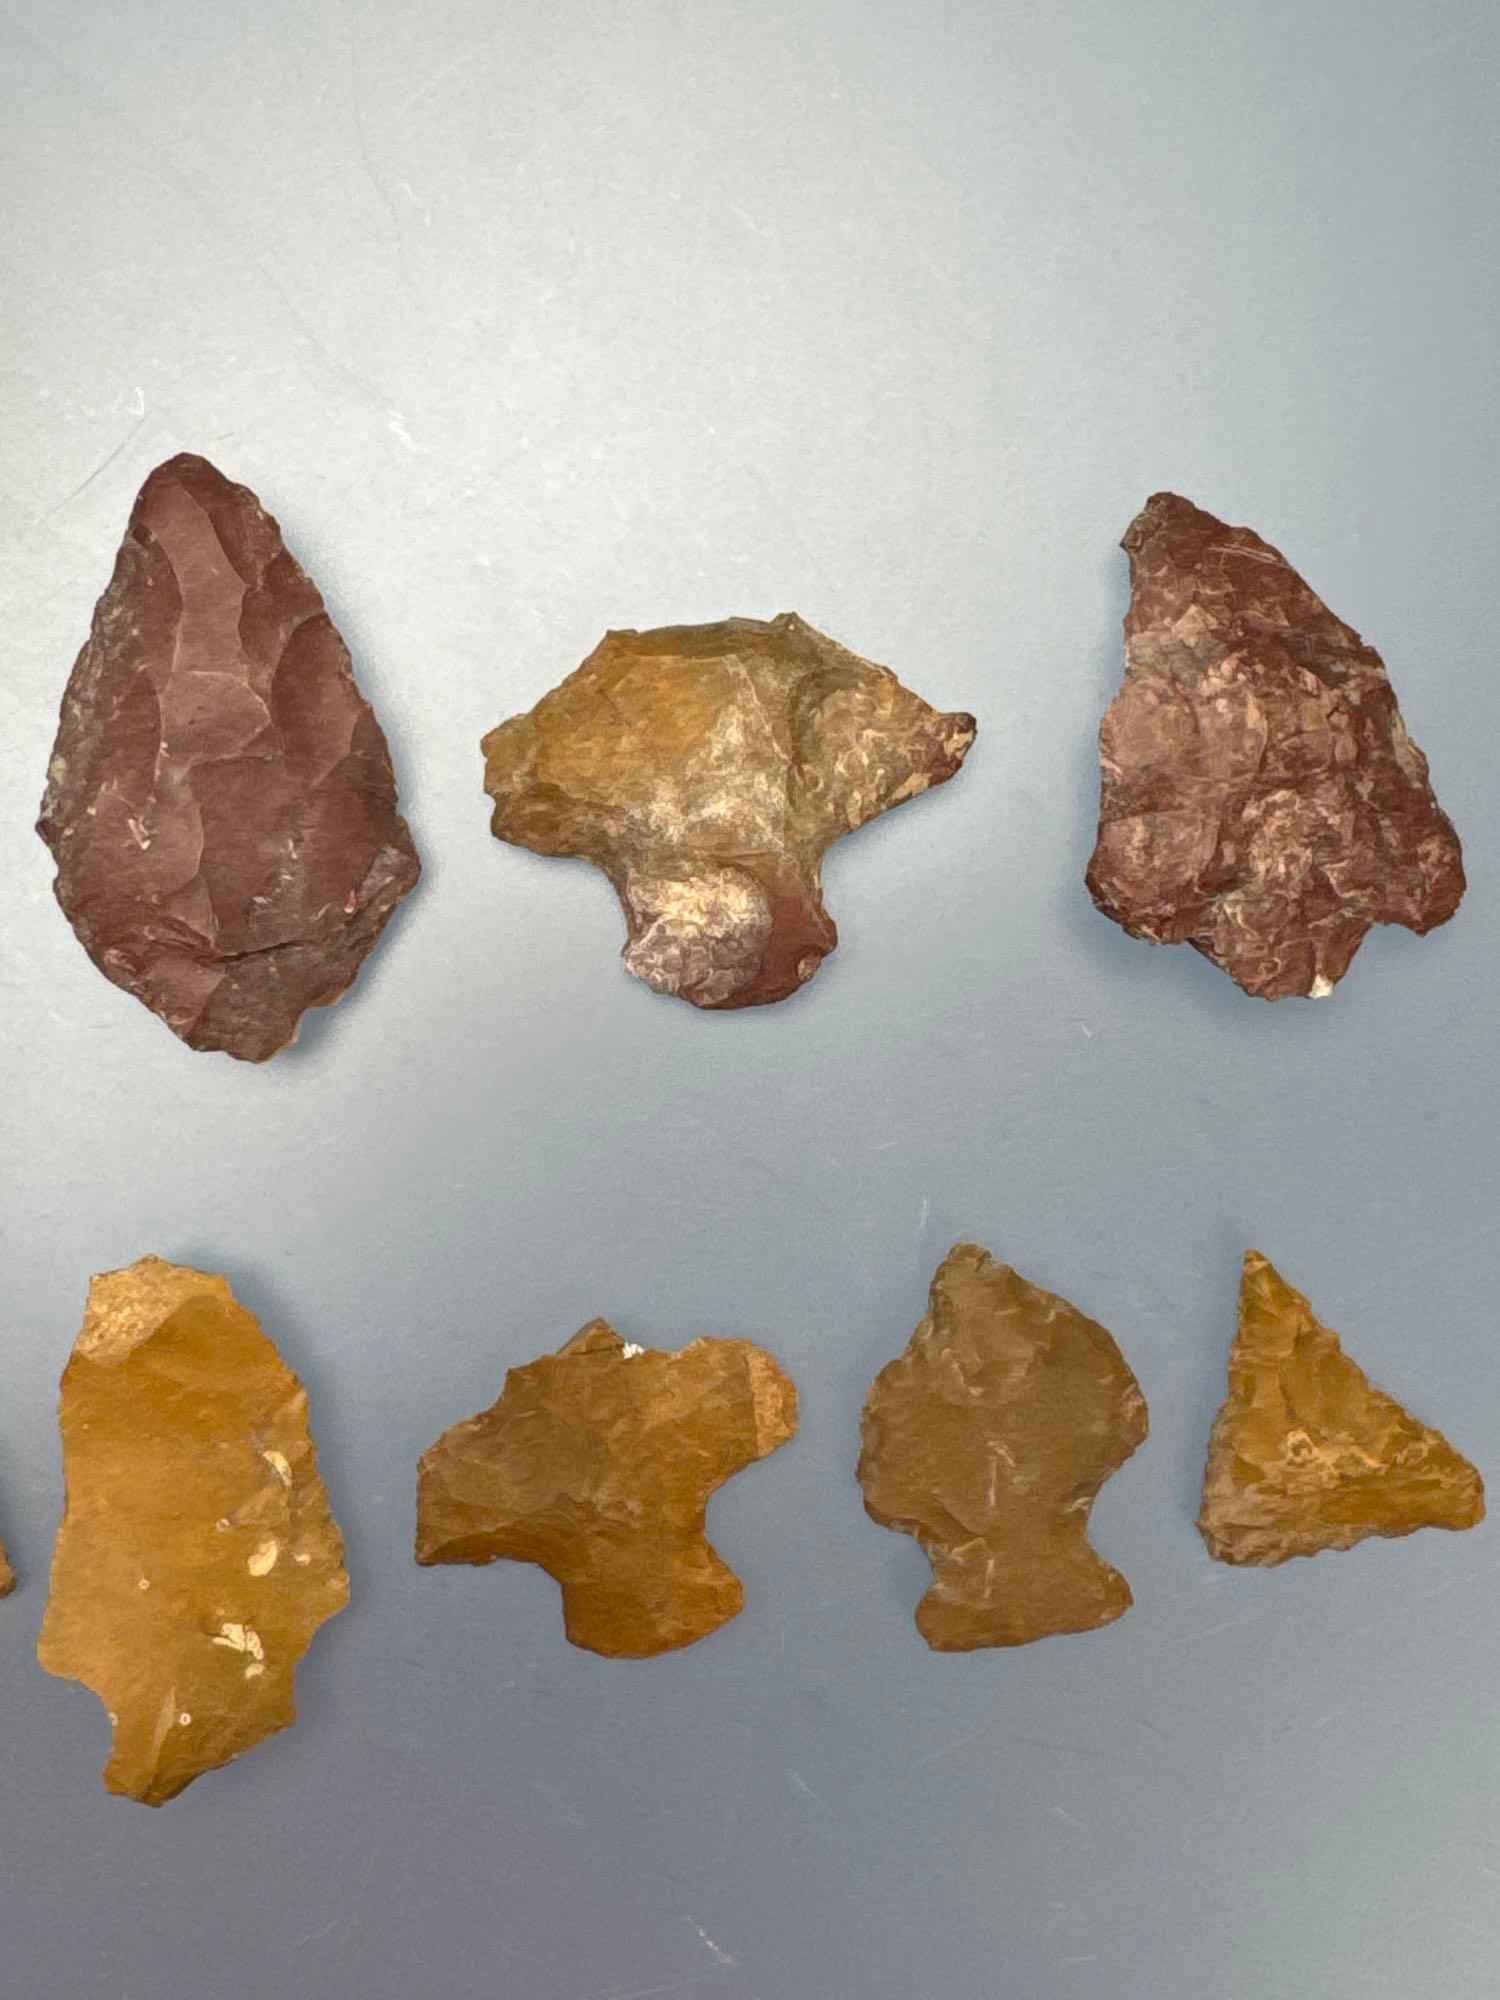 11 Decent Jasper Artifacts, Arrowheads, Found in Jim Thorpe Area in Pennsylvania, Longest is 2 3/4"